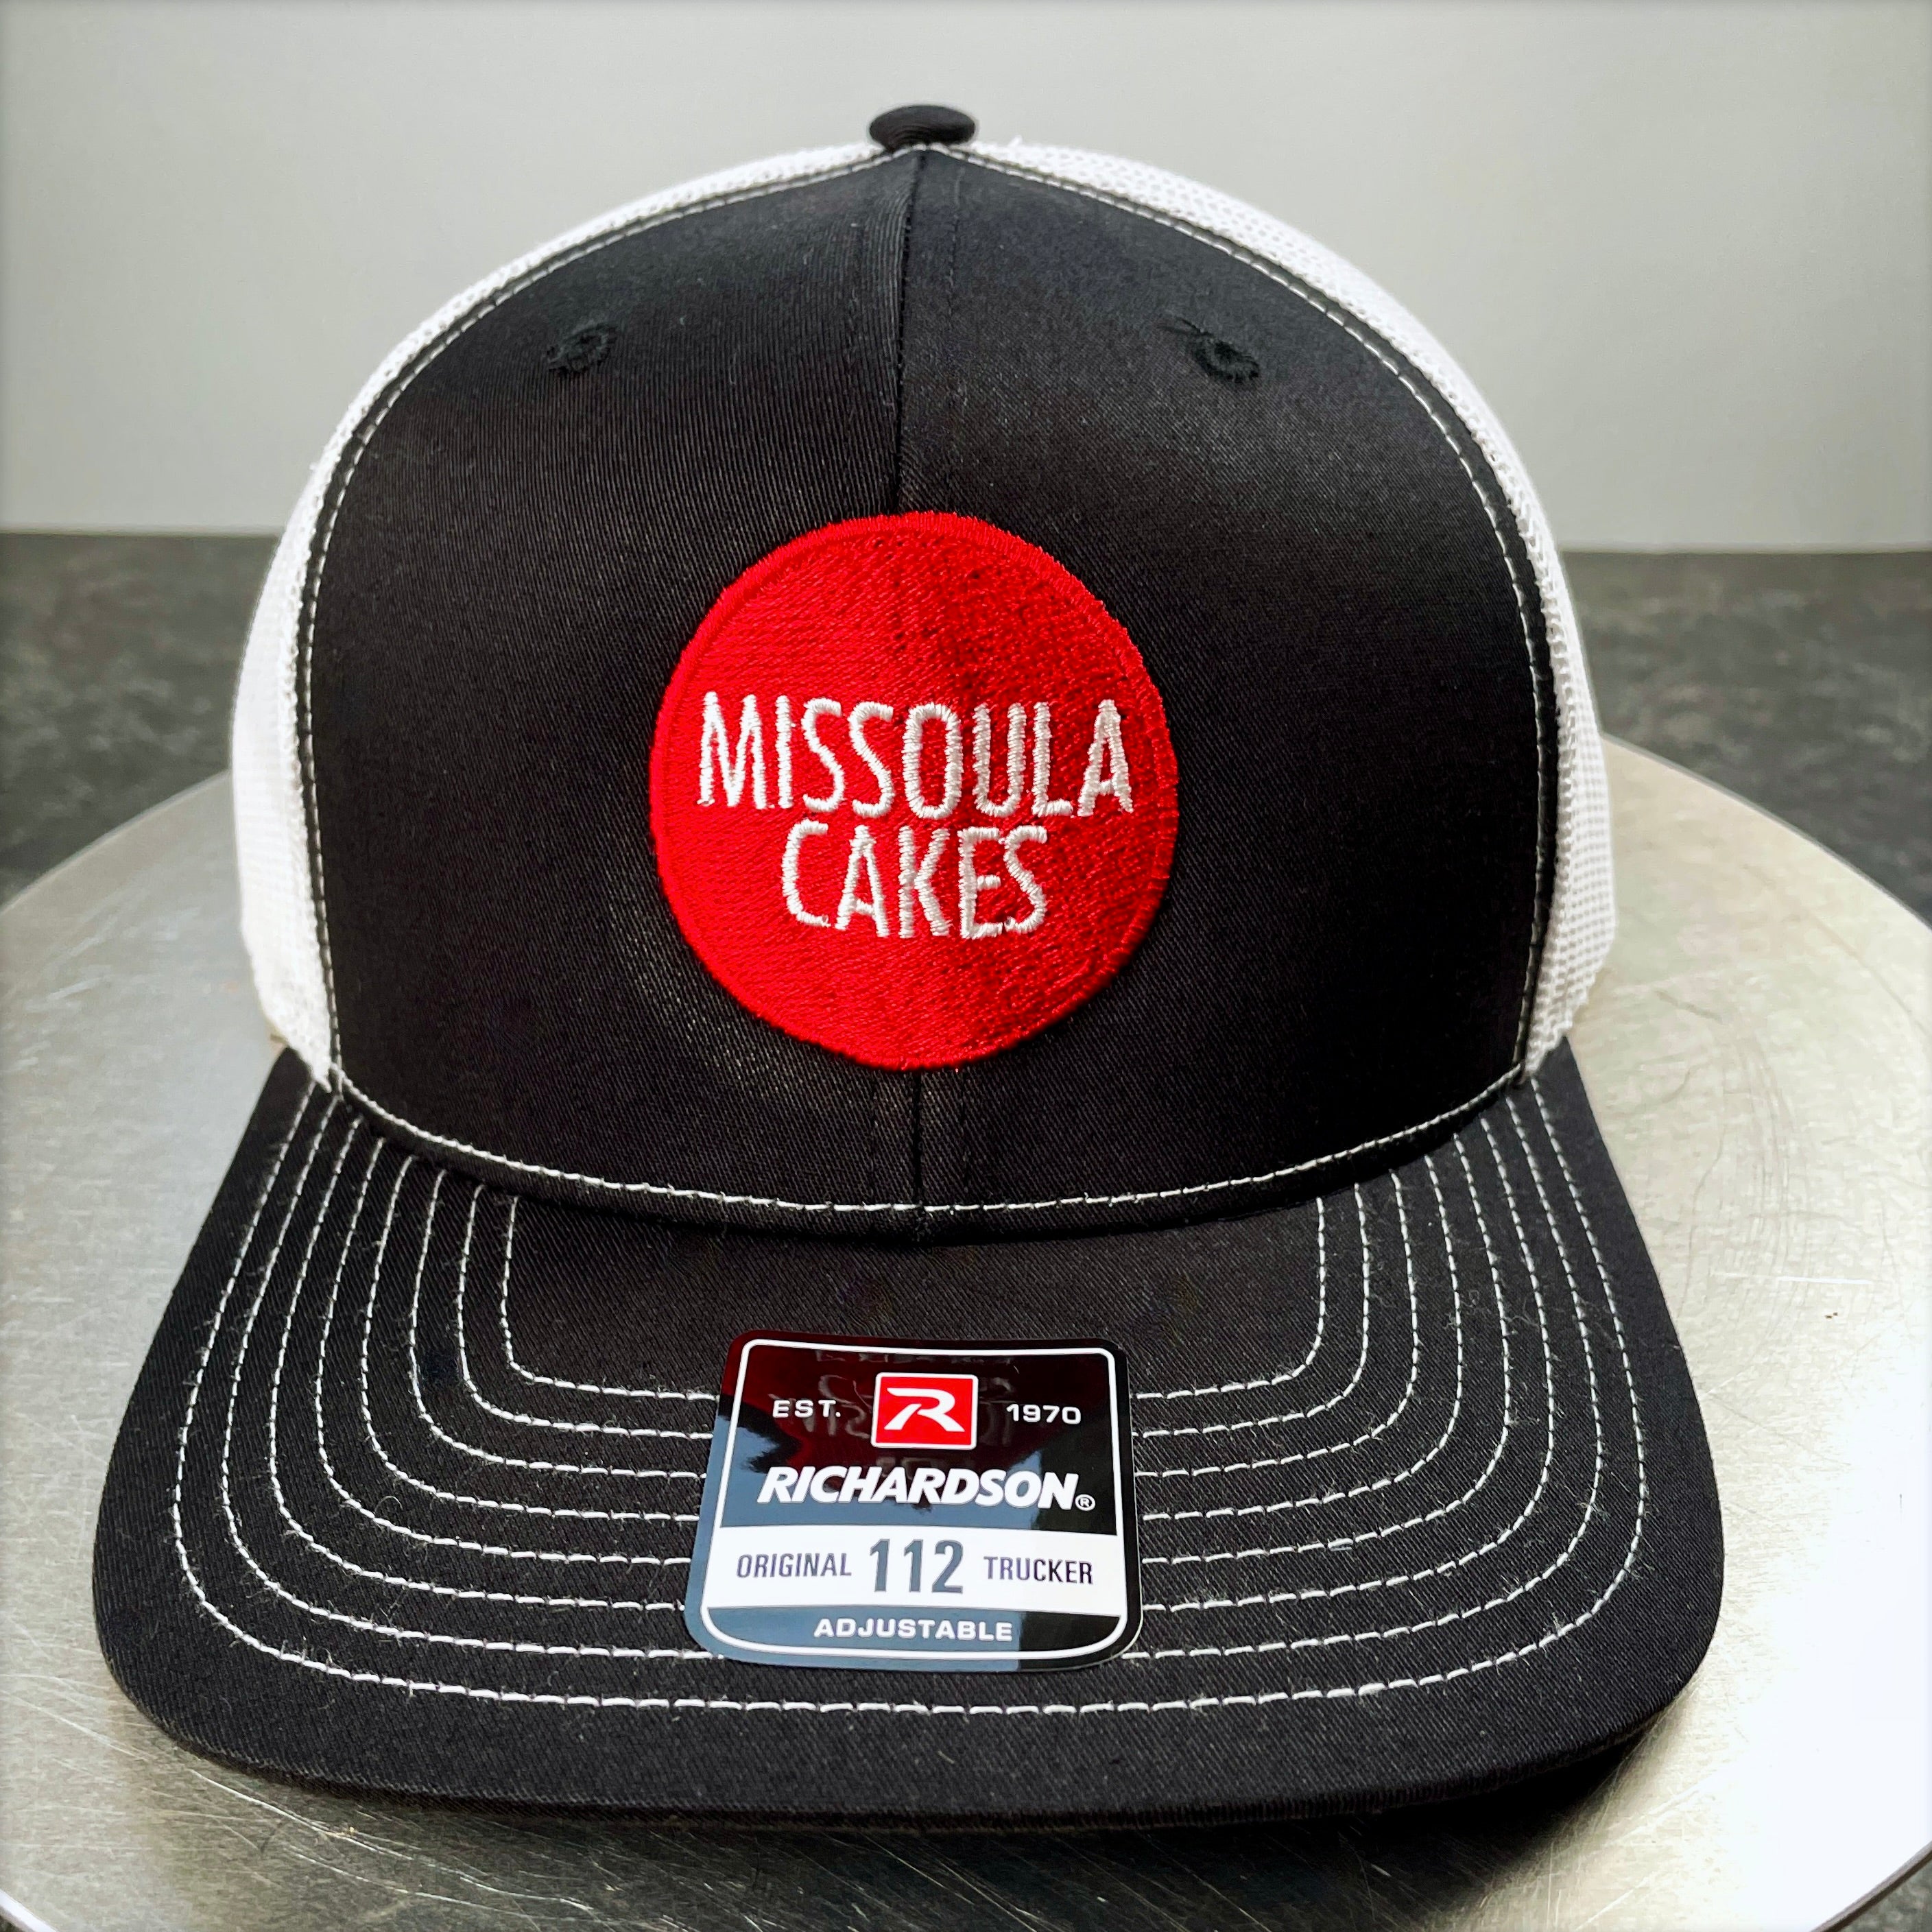 Missoula Cakes Trucker Hat